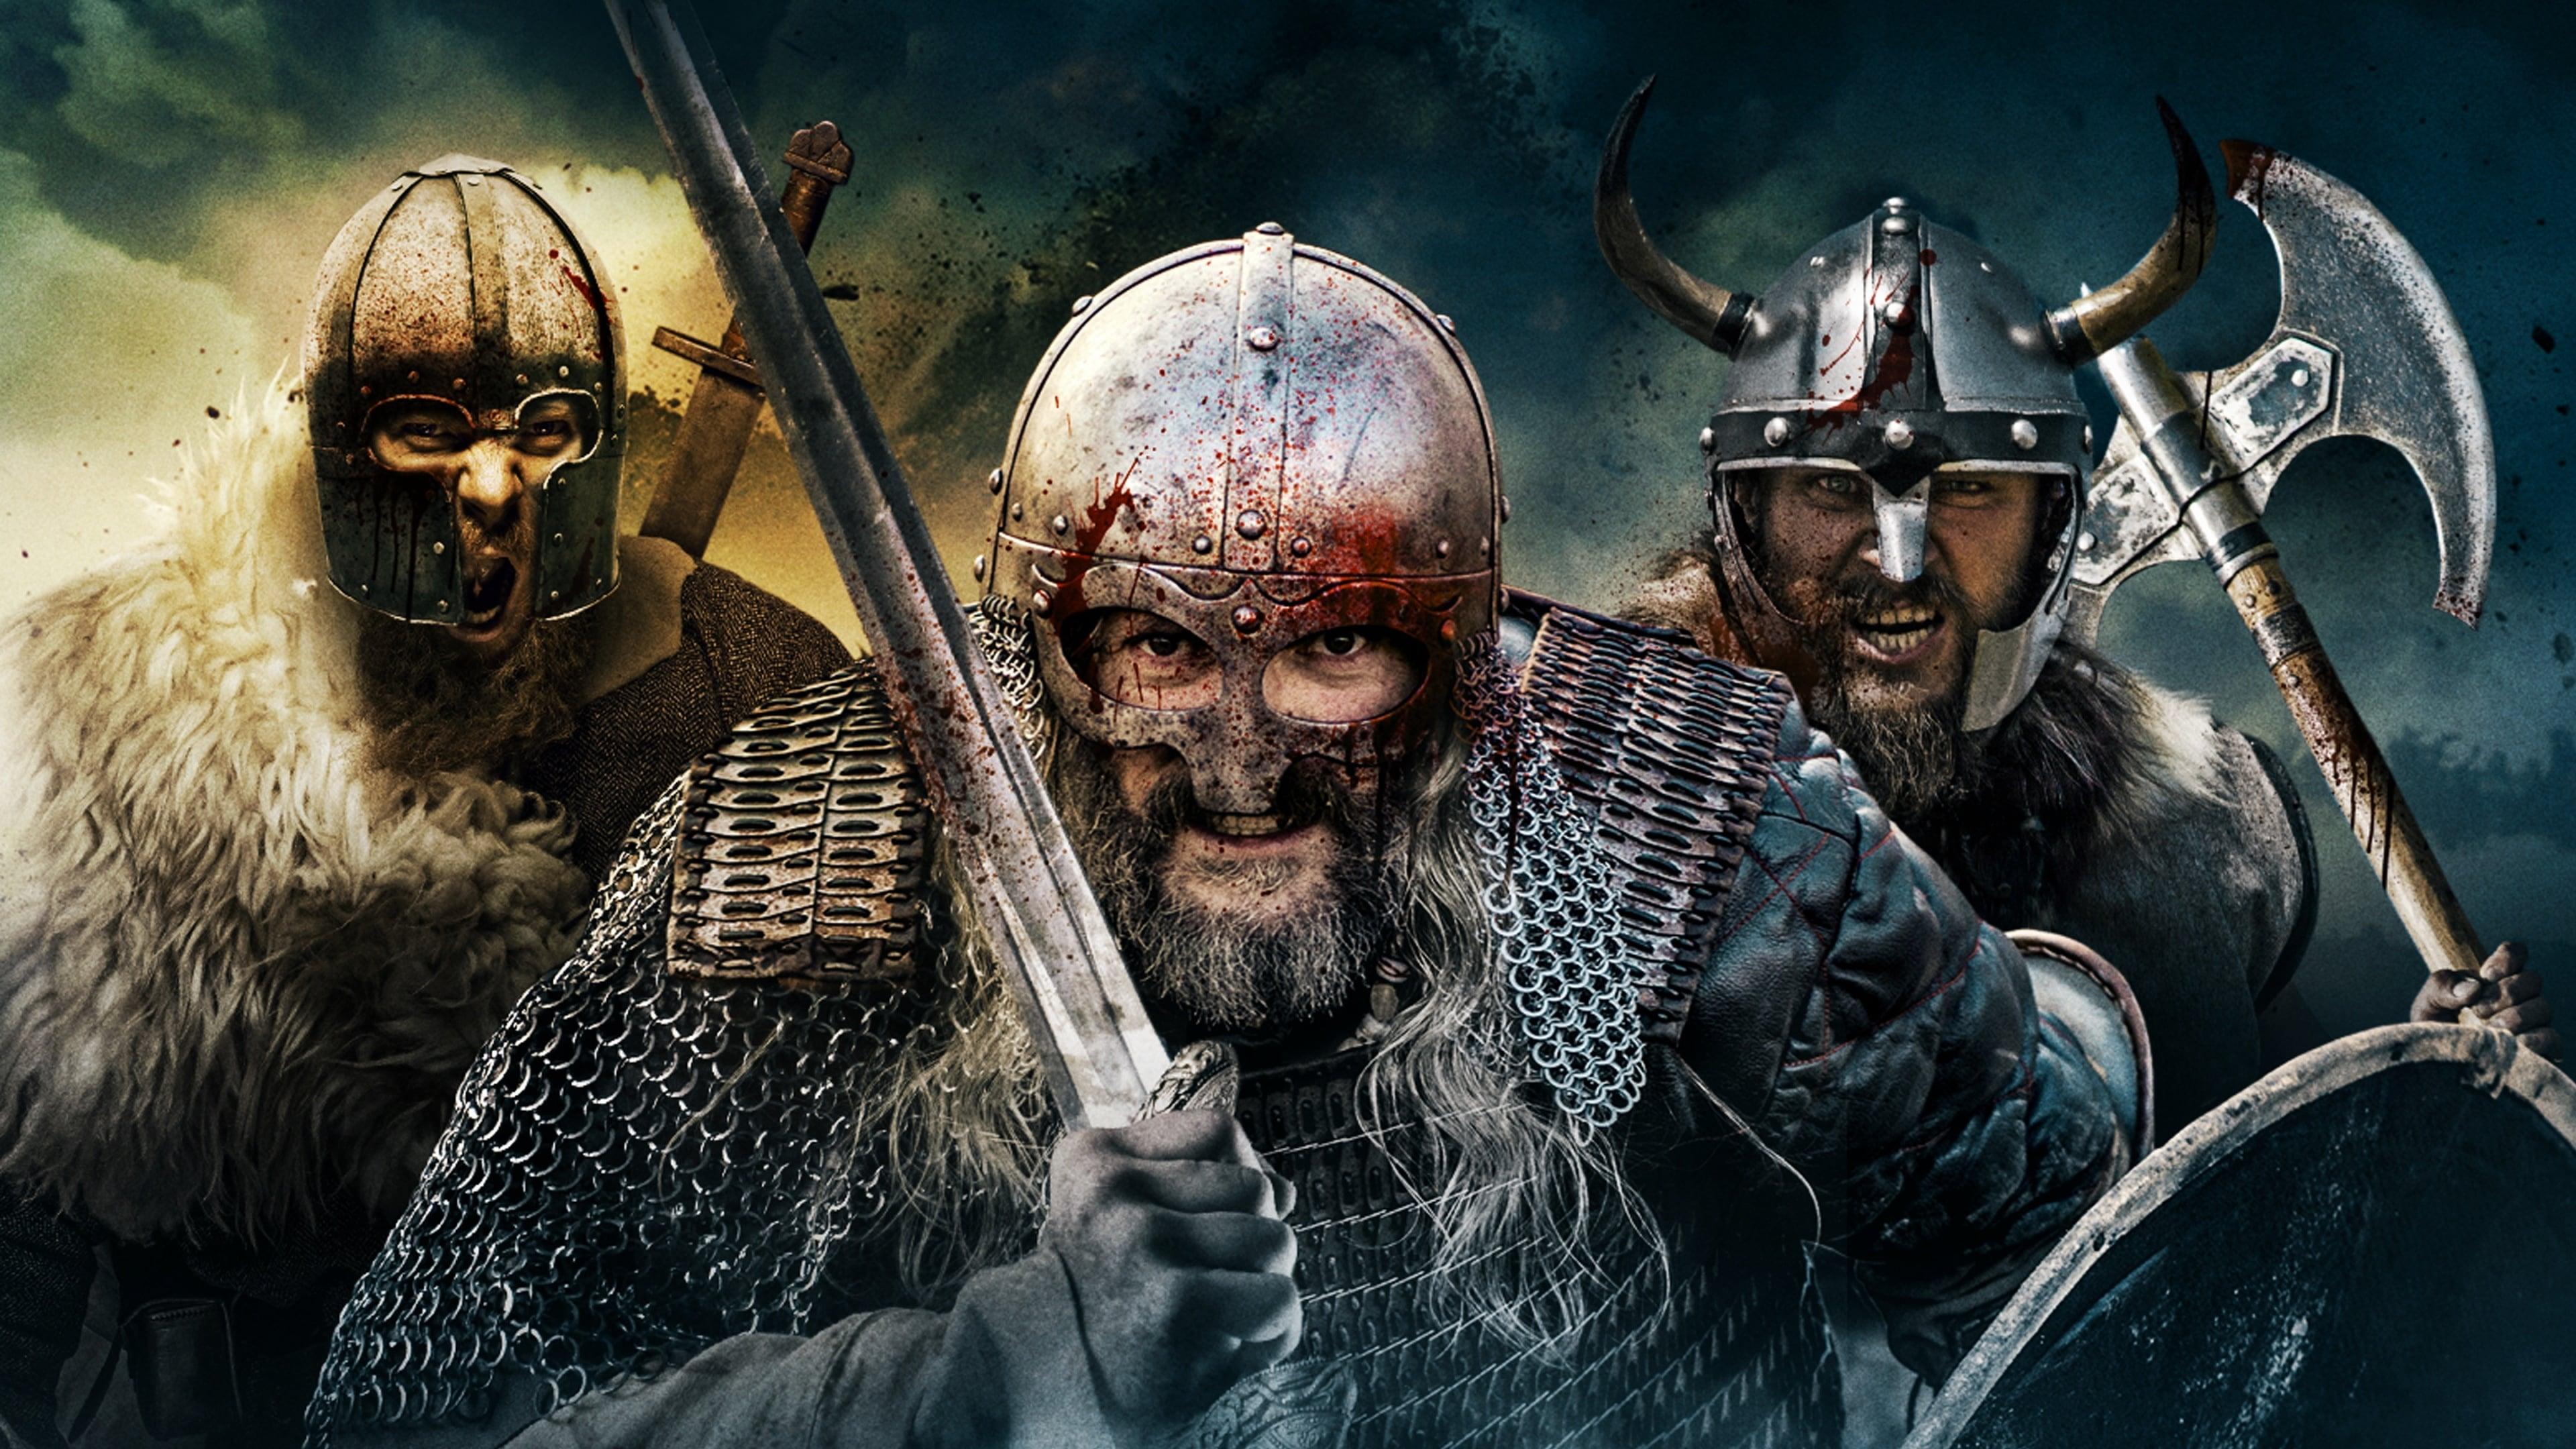 The Viking War backdrop